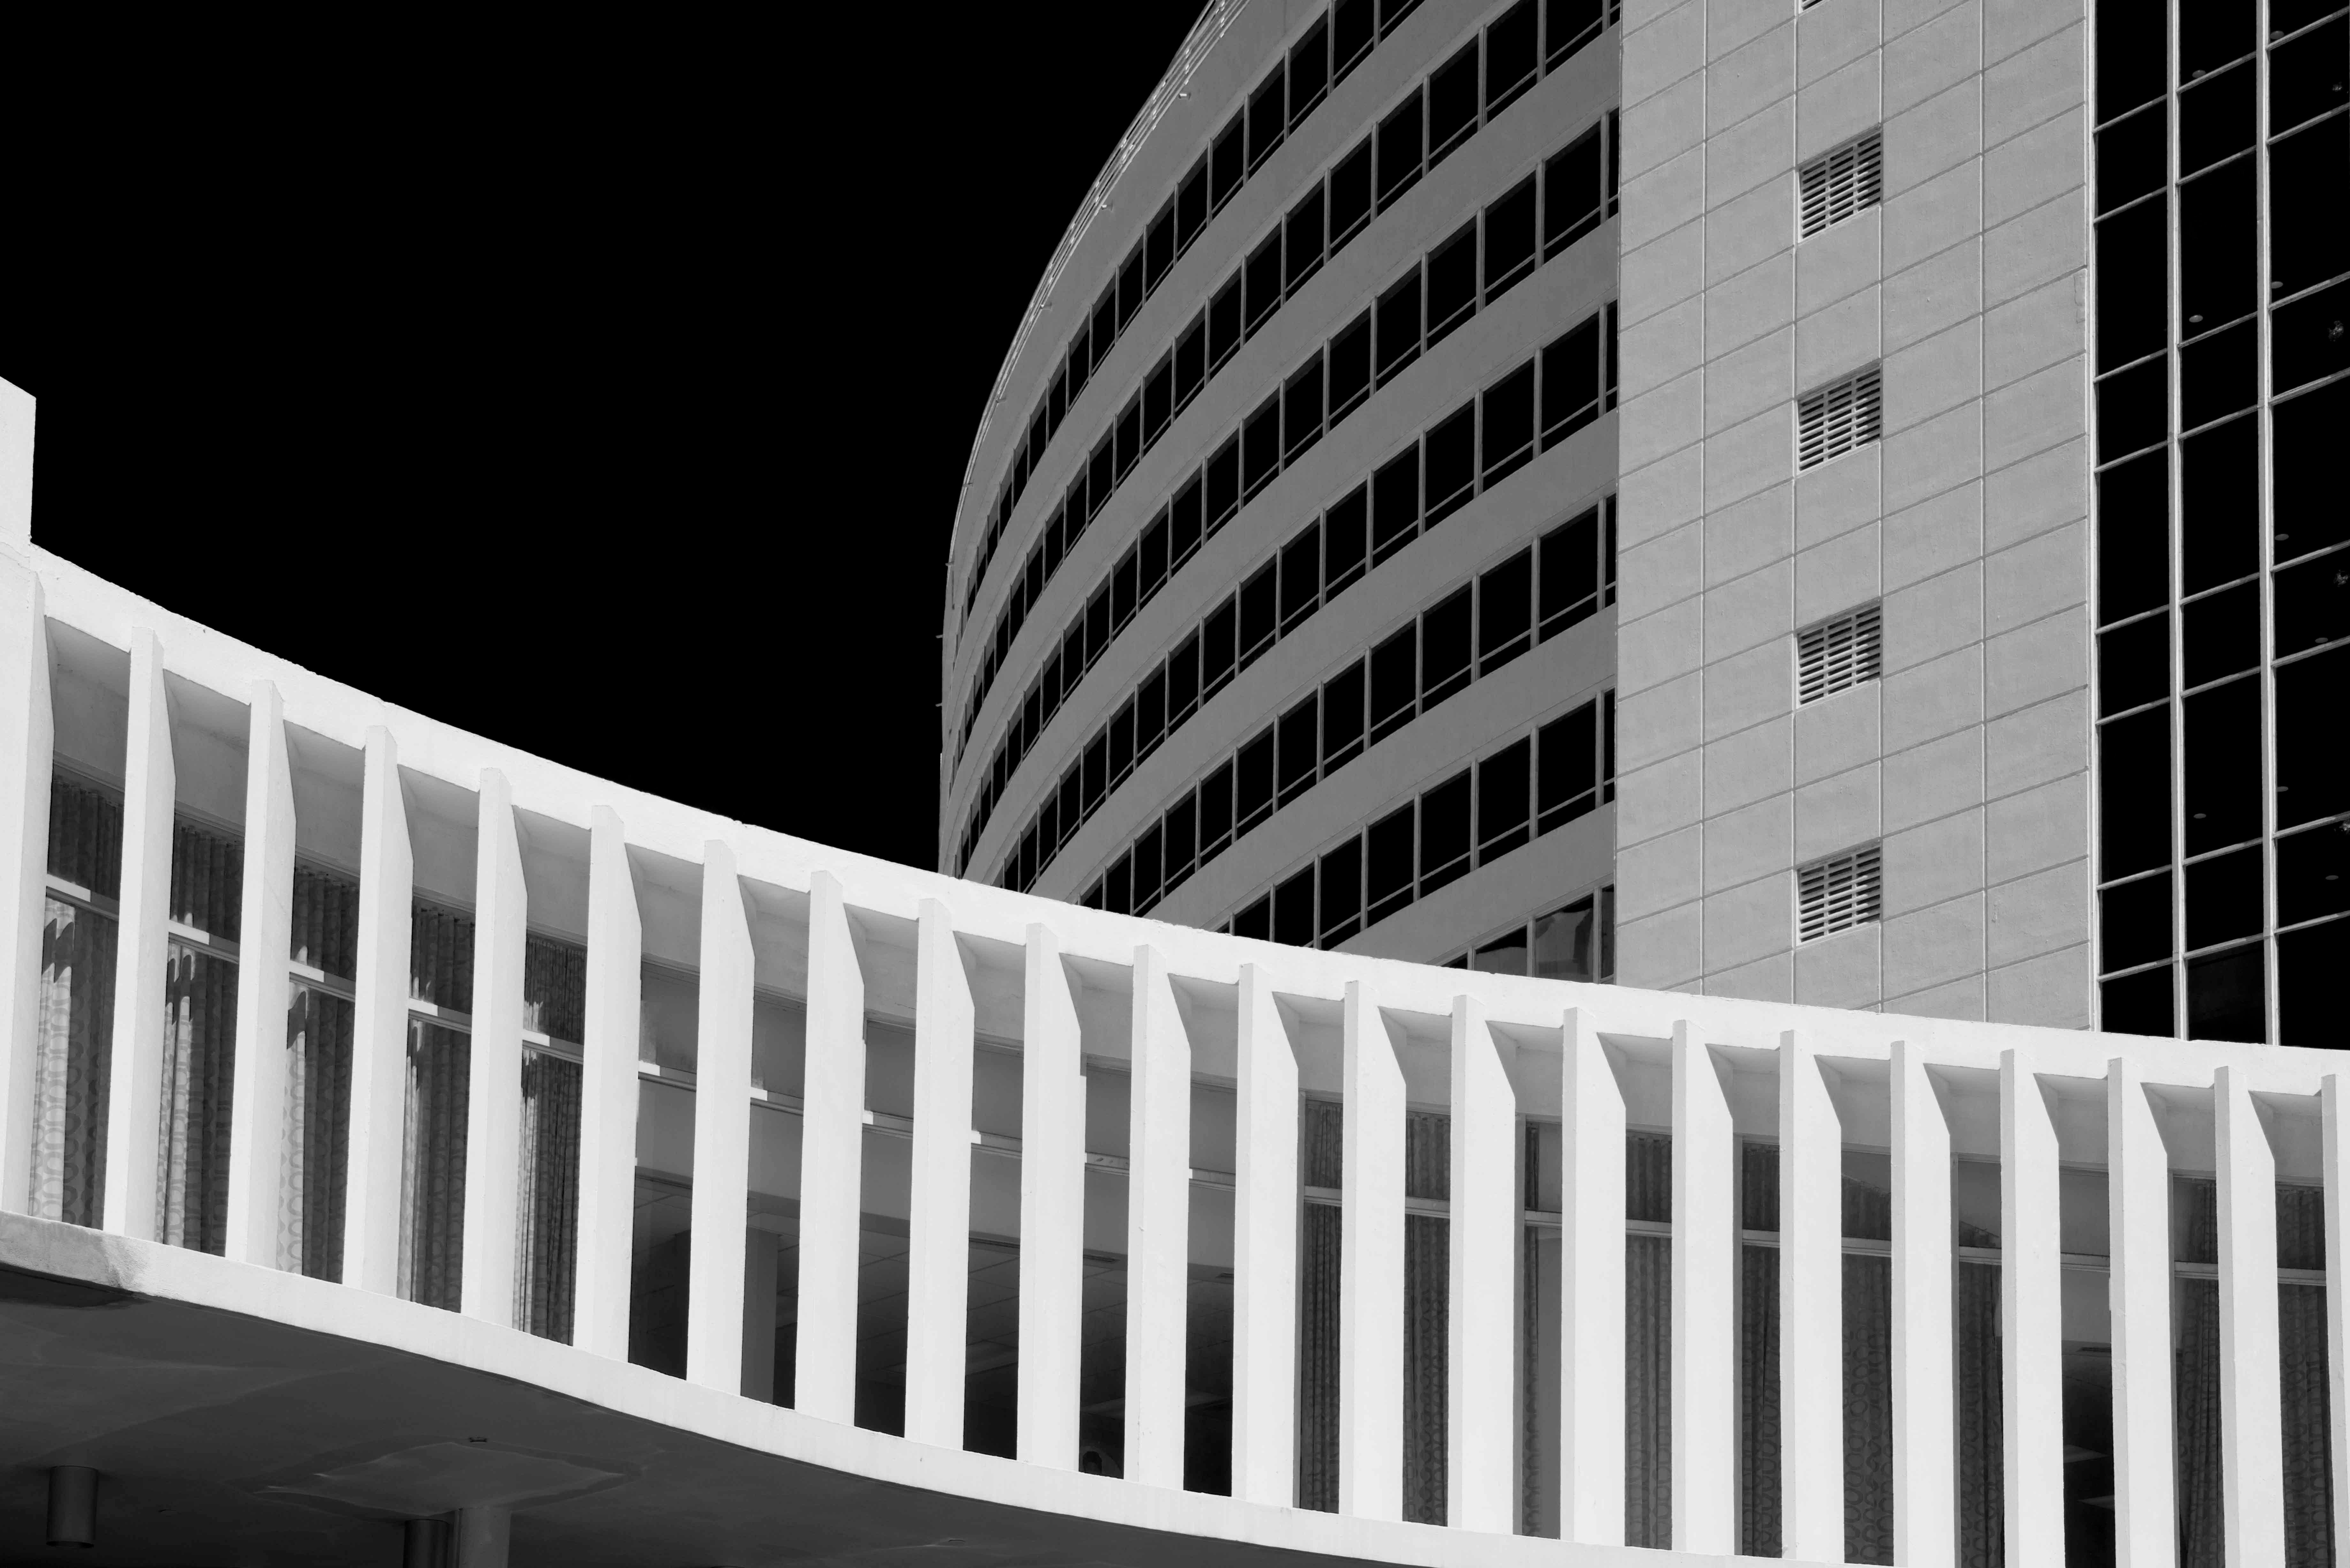 Luca Artioli Black and White Photograph - Miami Stripes, Black and White Architectural Landscape Photography